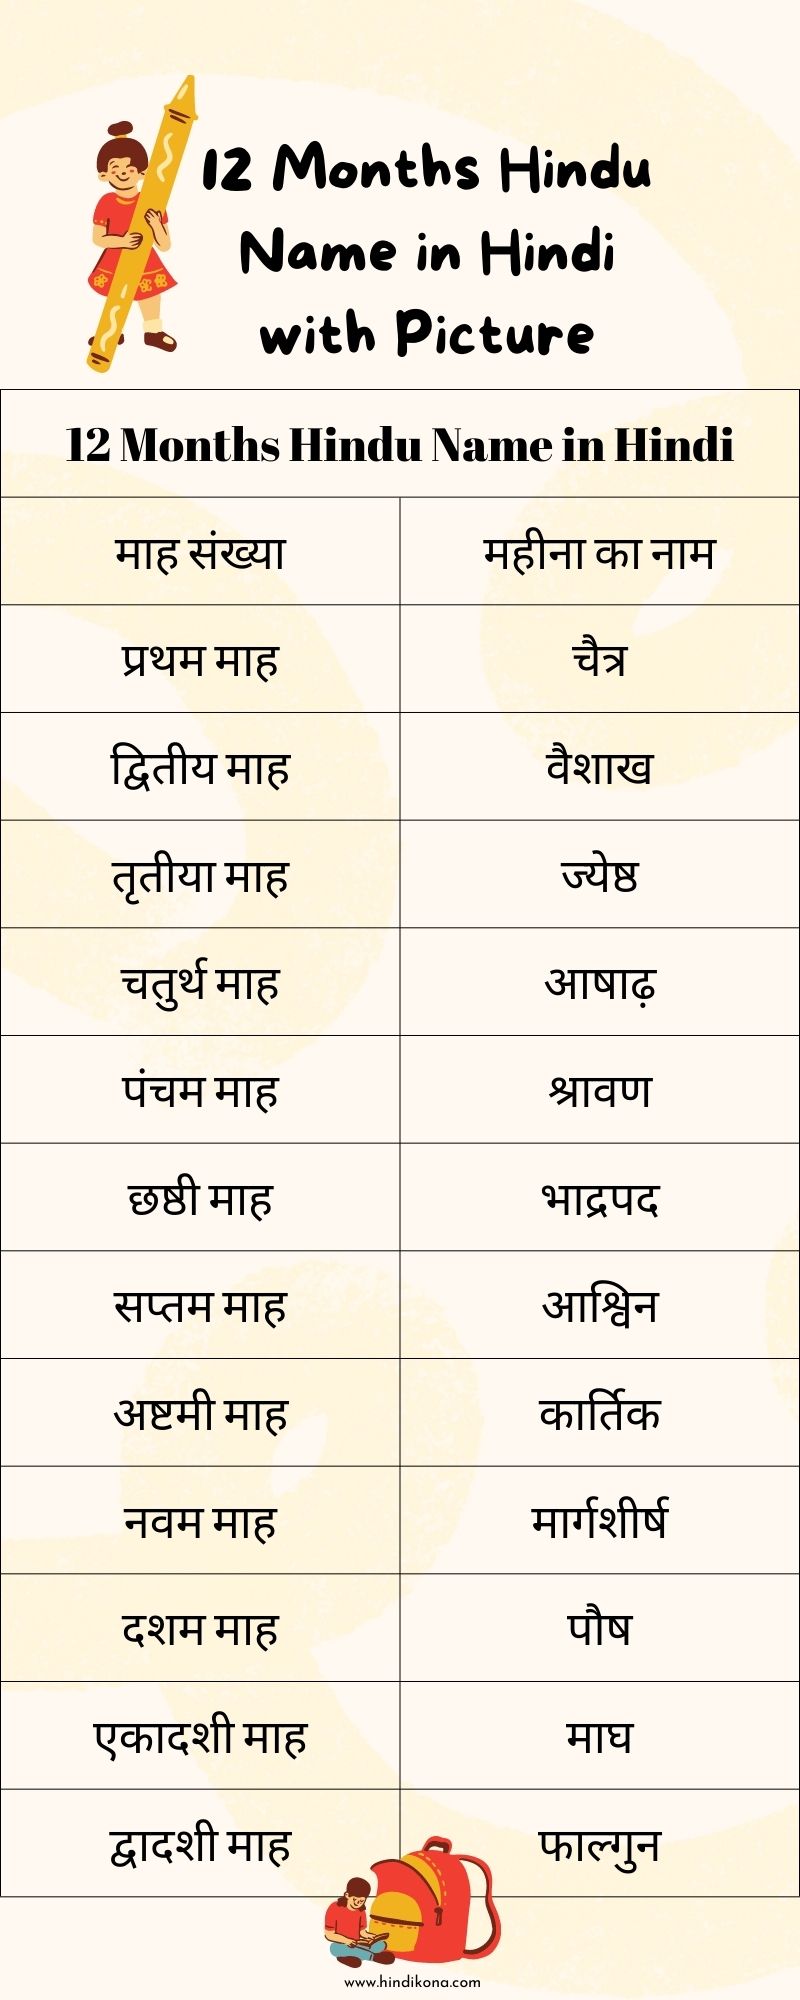 12-Months-Hindu-Name-in-Hindi